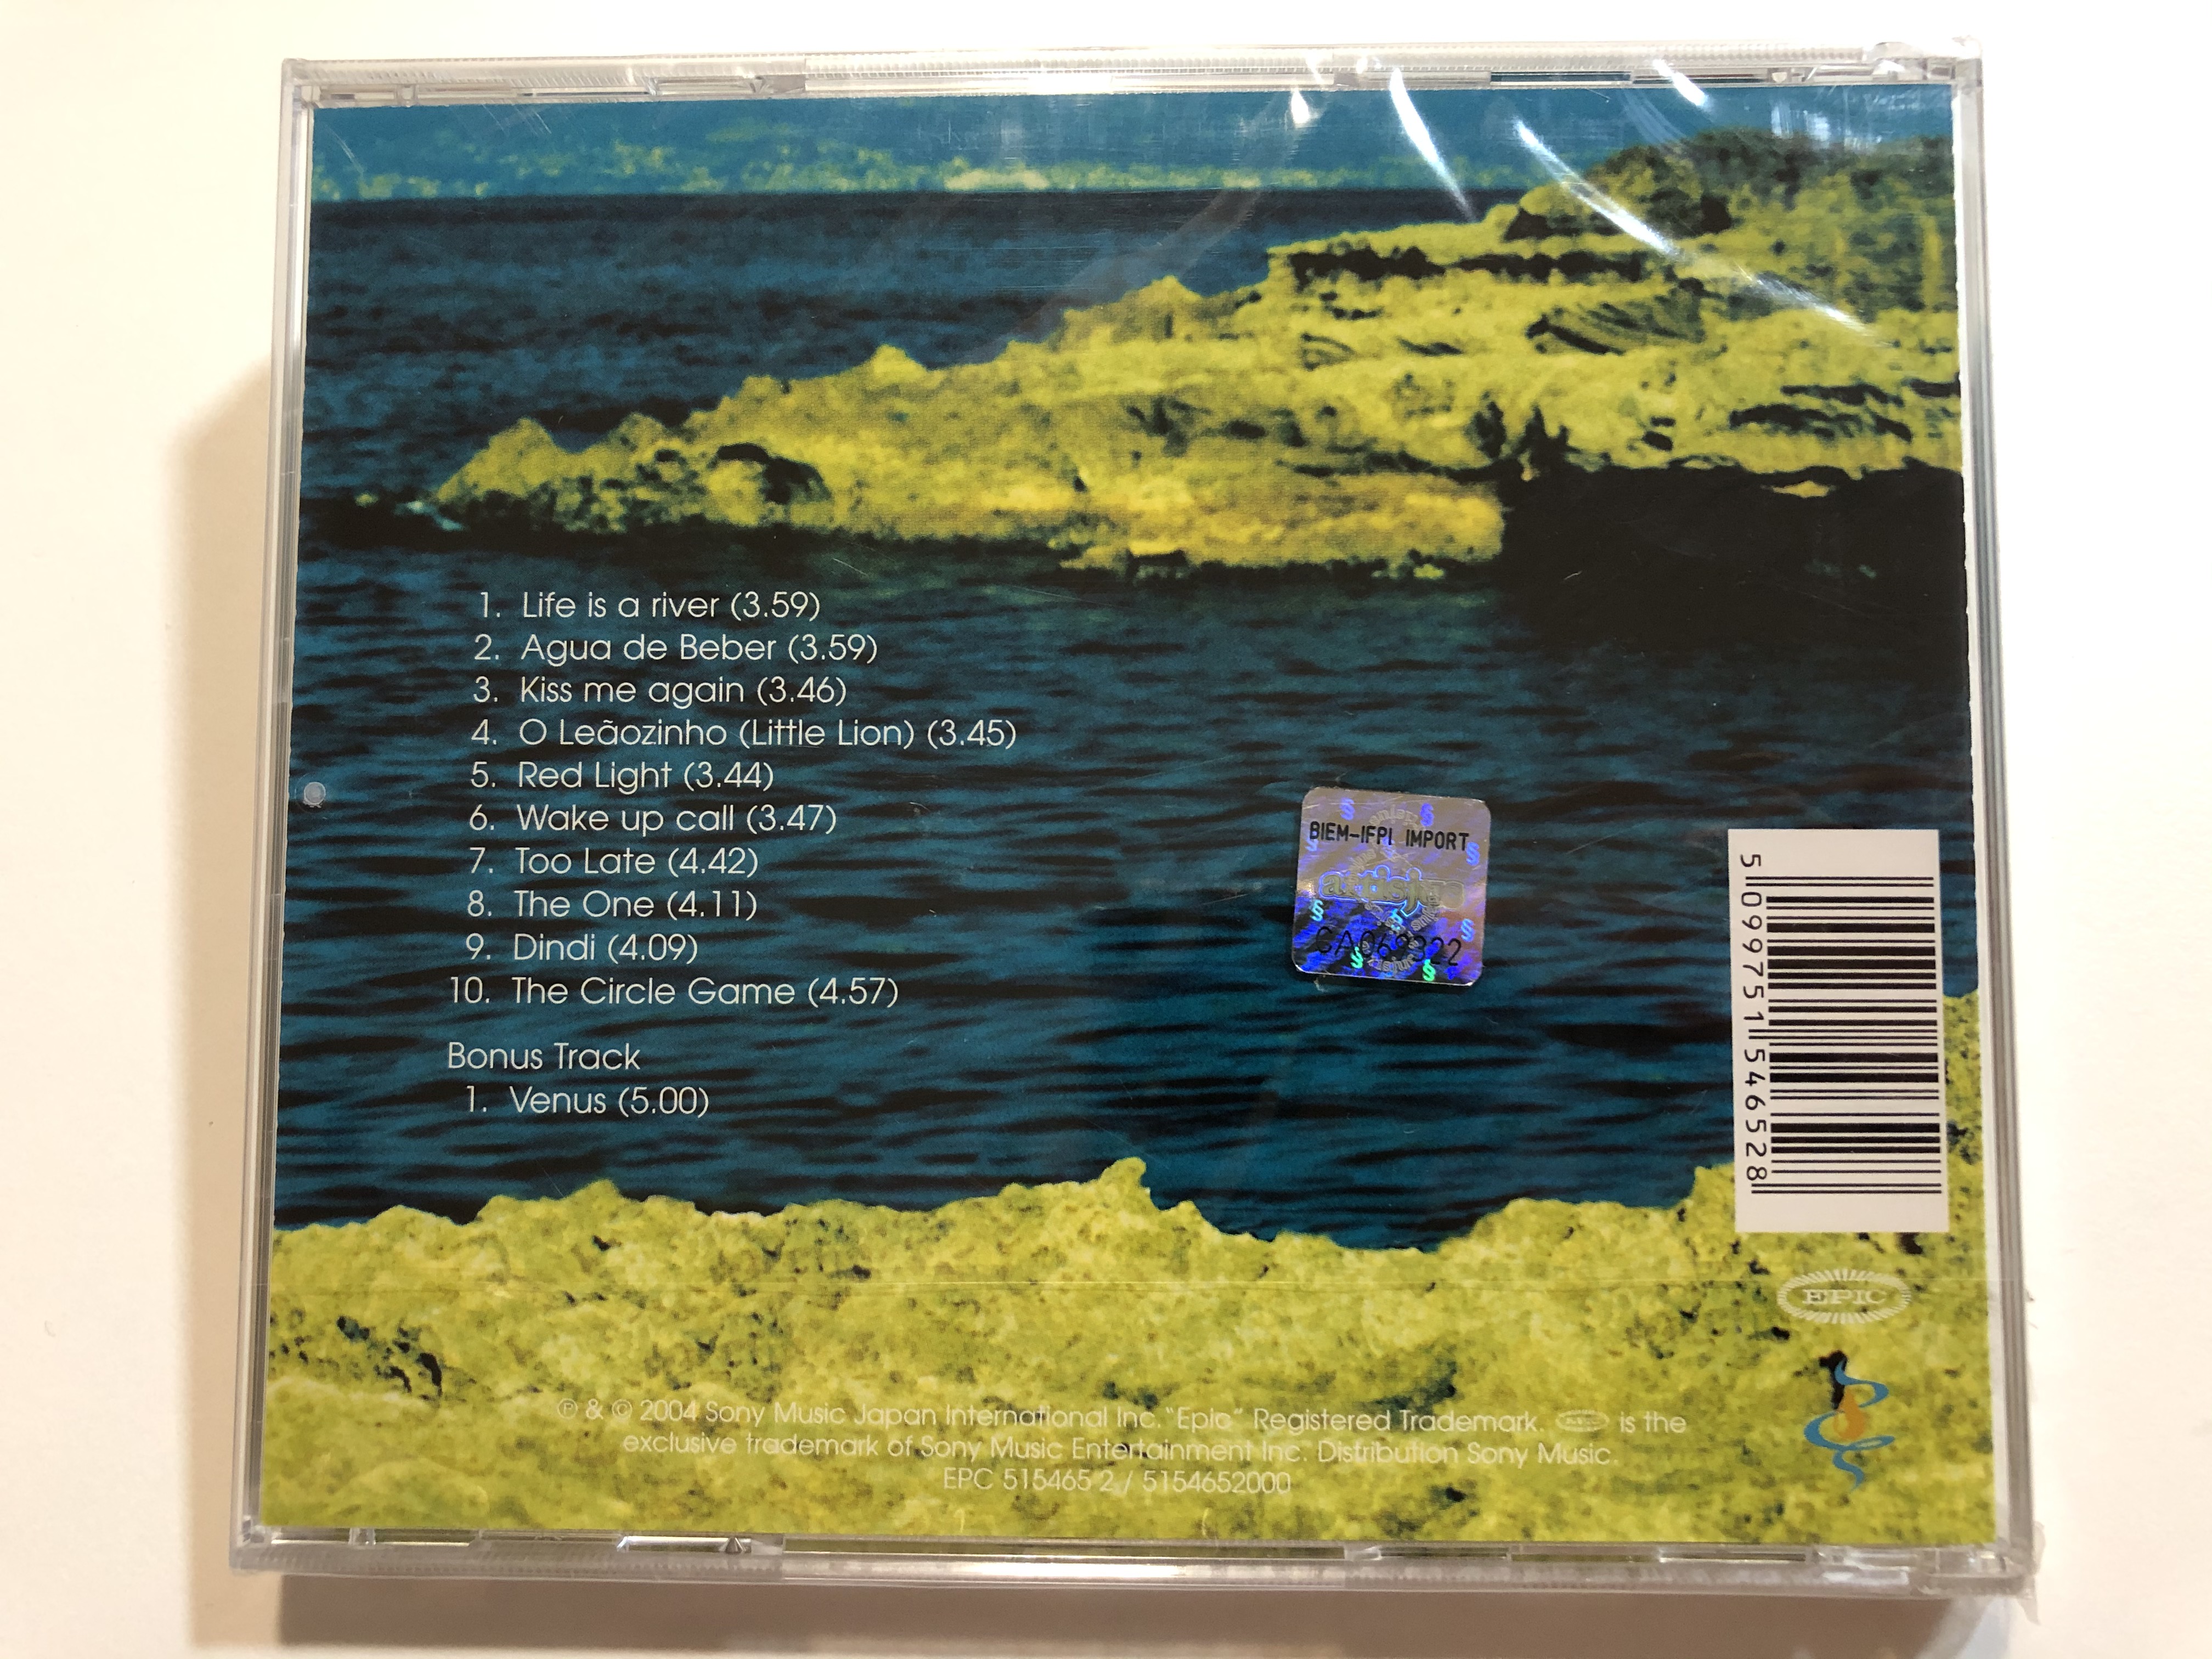 mellow-by-meja-sony-music-japan-audio-cd-2004-epc-515465-2-2-.jpg